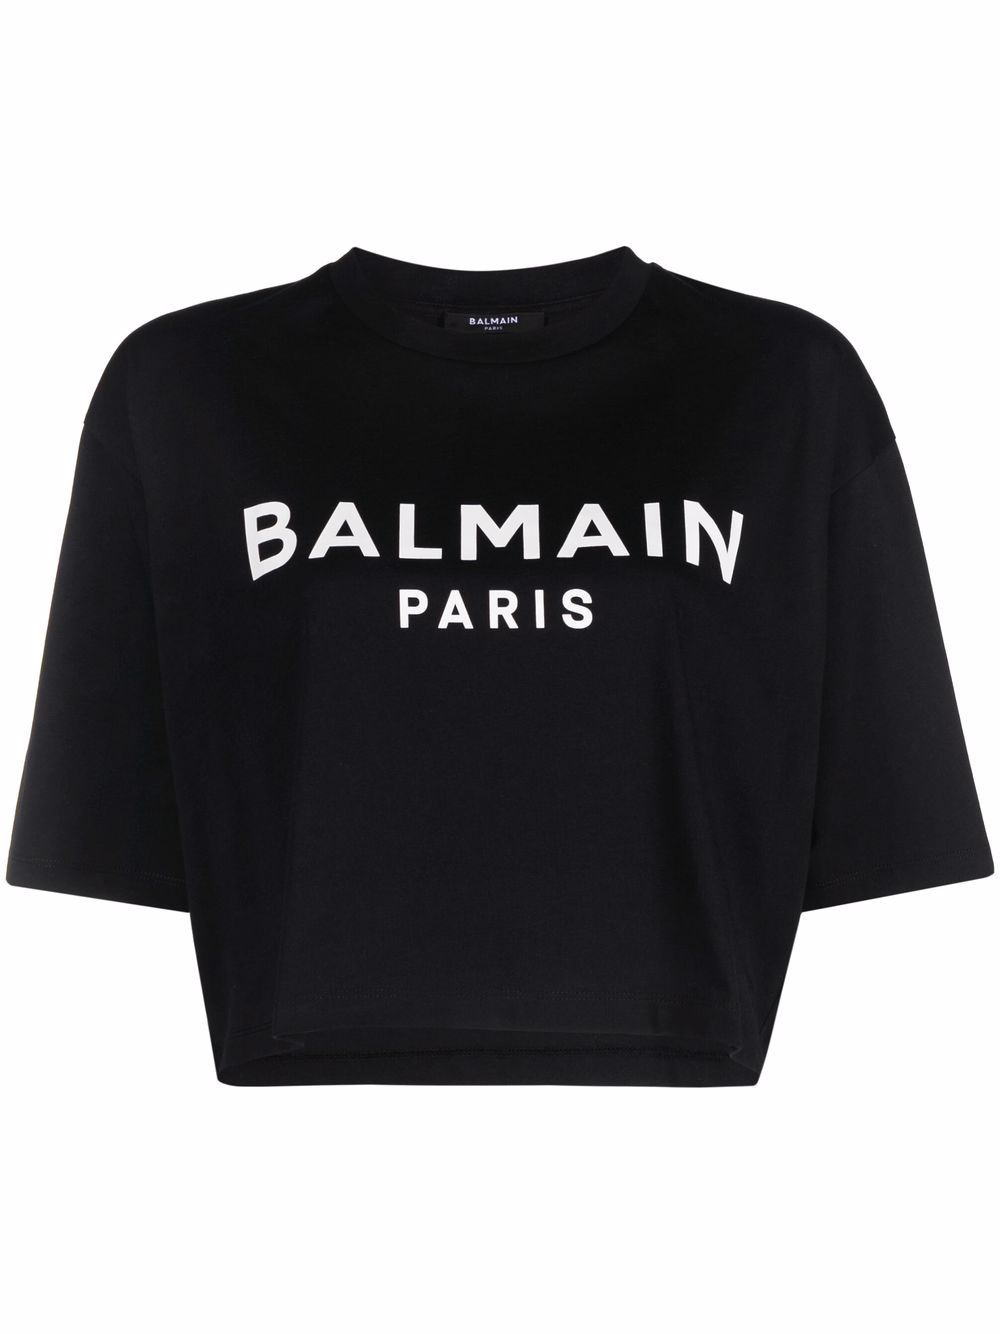 BALMAIN WOMEN Cropped Balmain Print T-Shirt Black - MAISONDEFASHION.COM